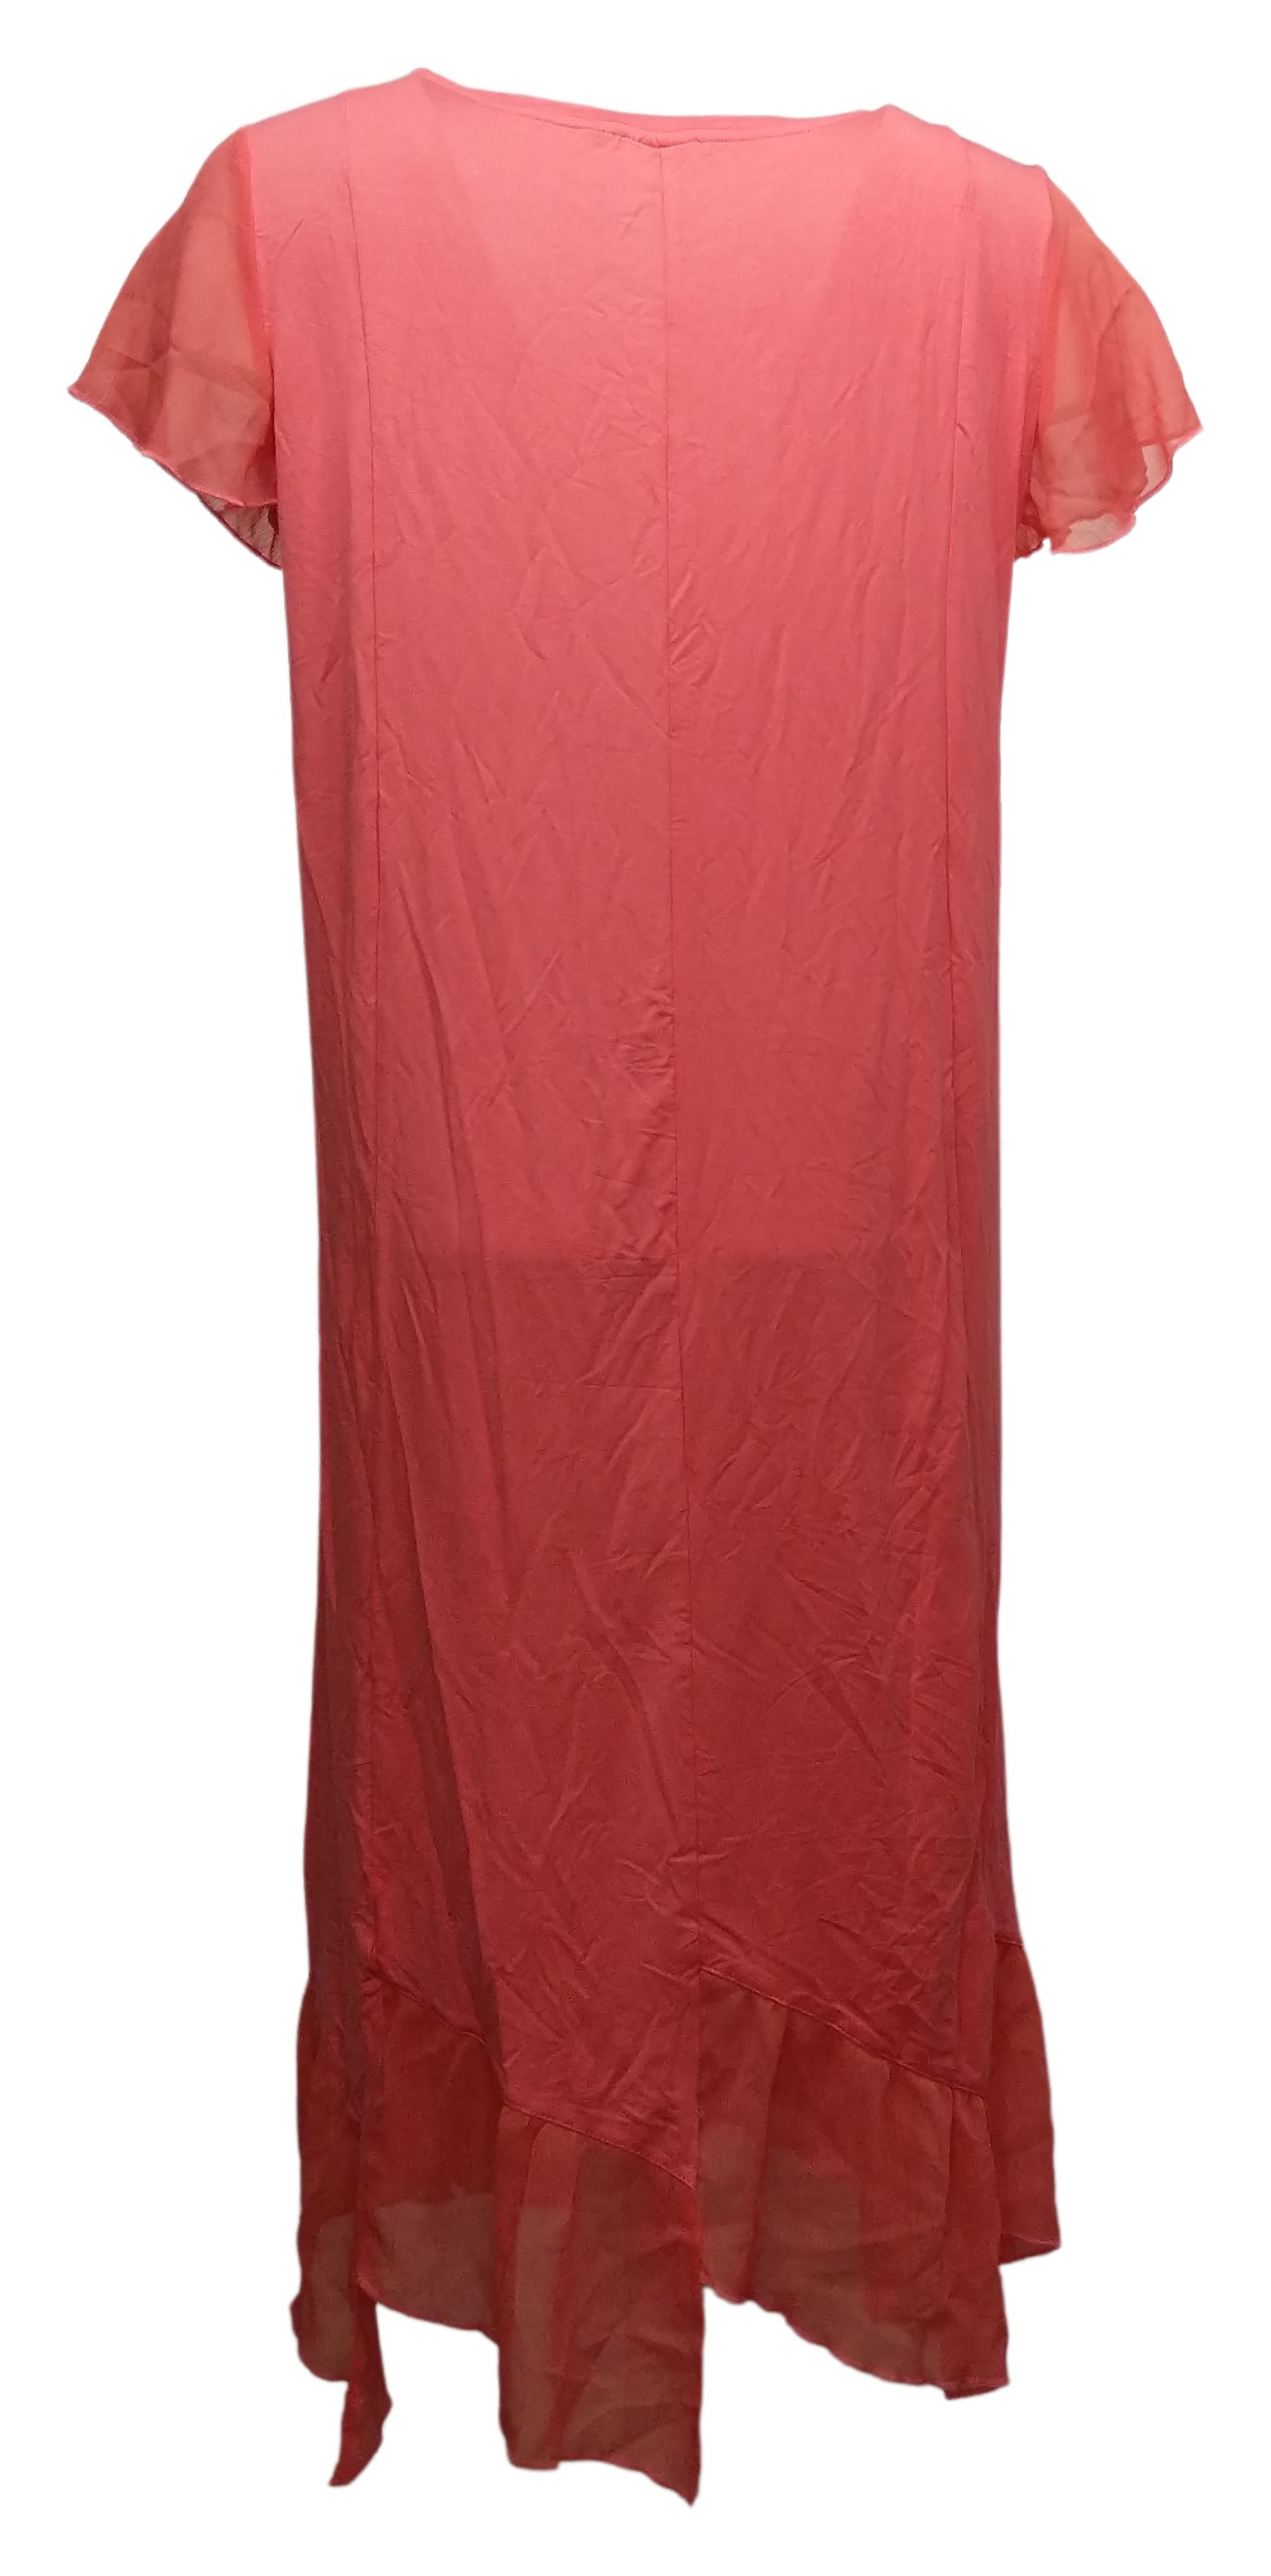 LOGO by Lori Goldstein Petite Rayon 230 Dress Chiffon Details Women's PS Pink